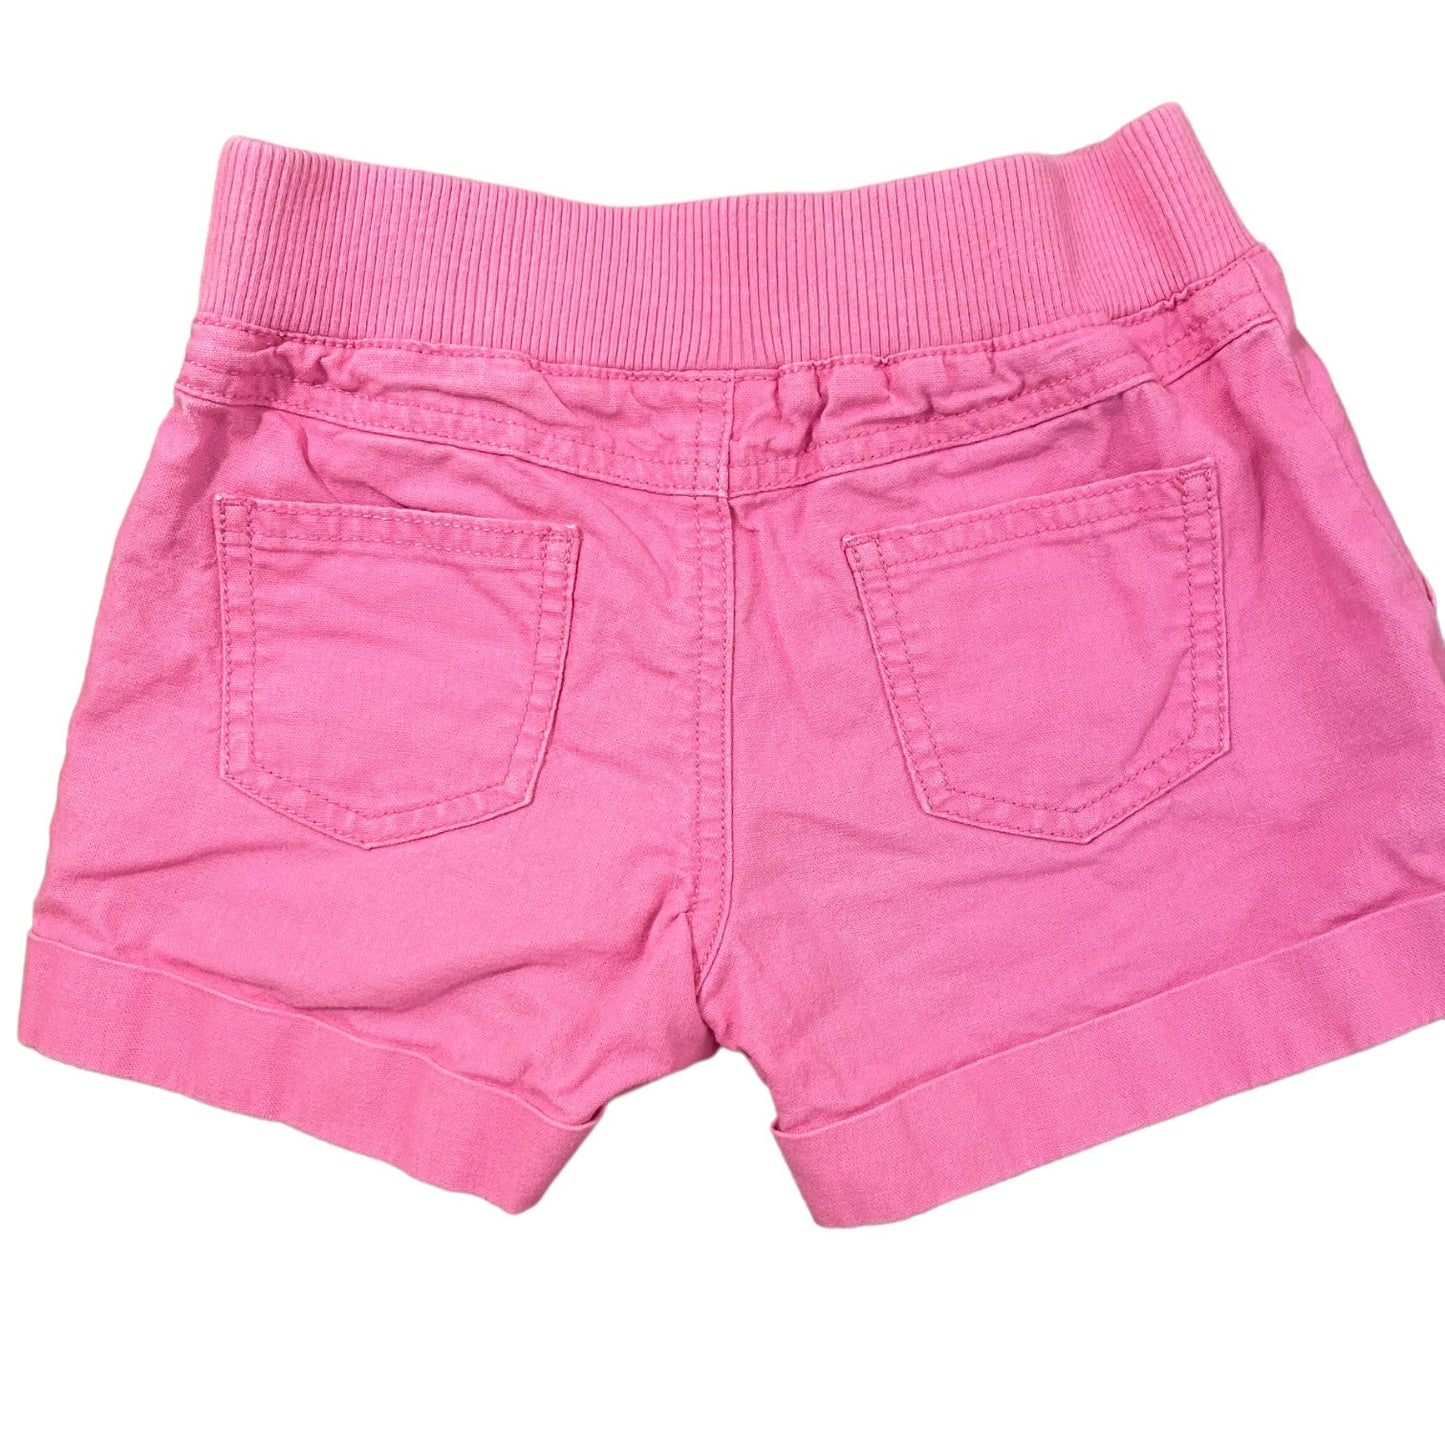 Gymboree Pink Girls Shorts Size 5